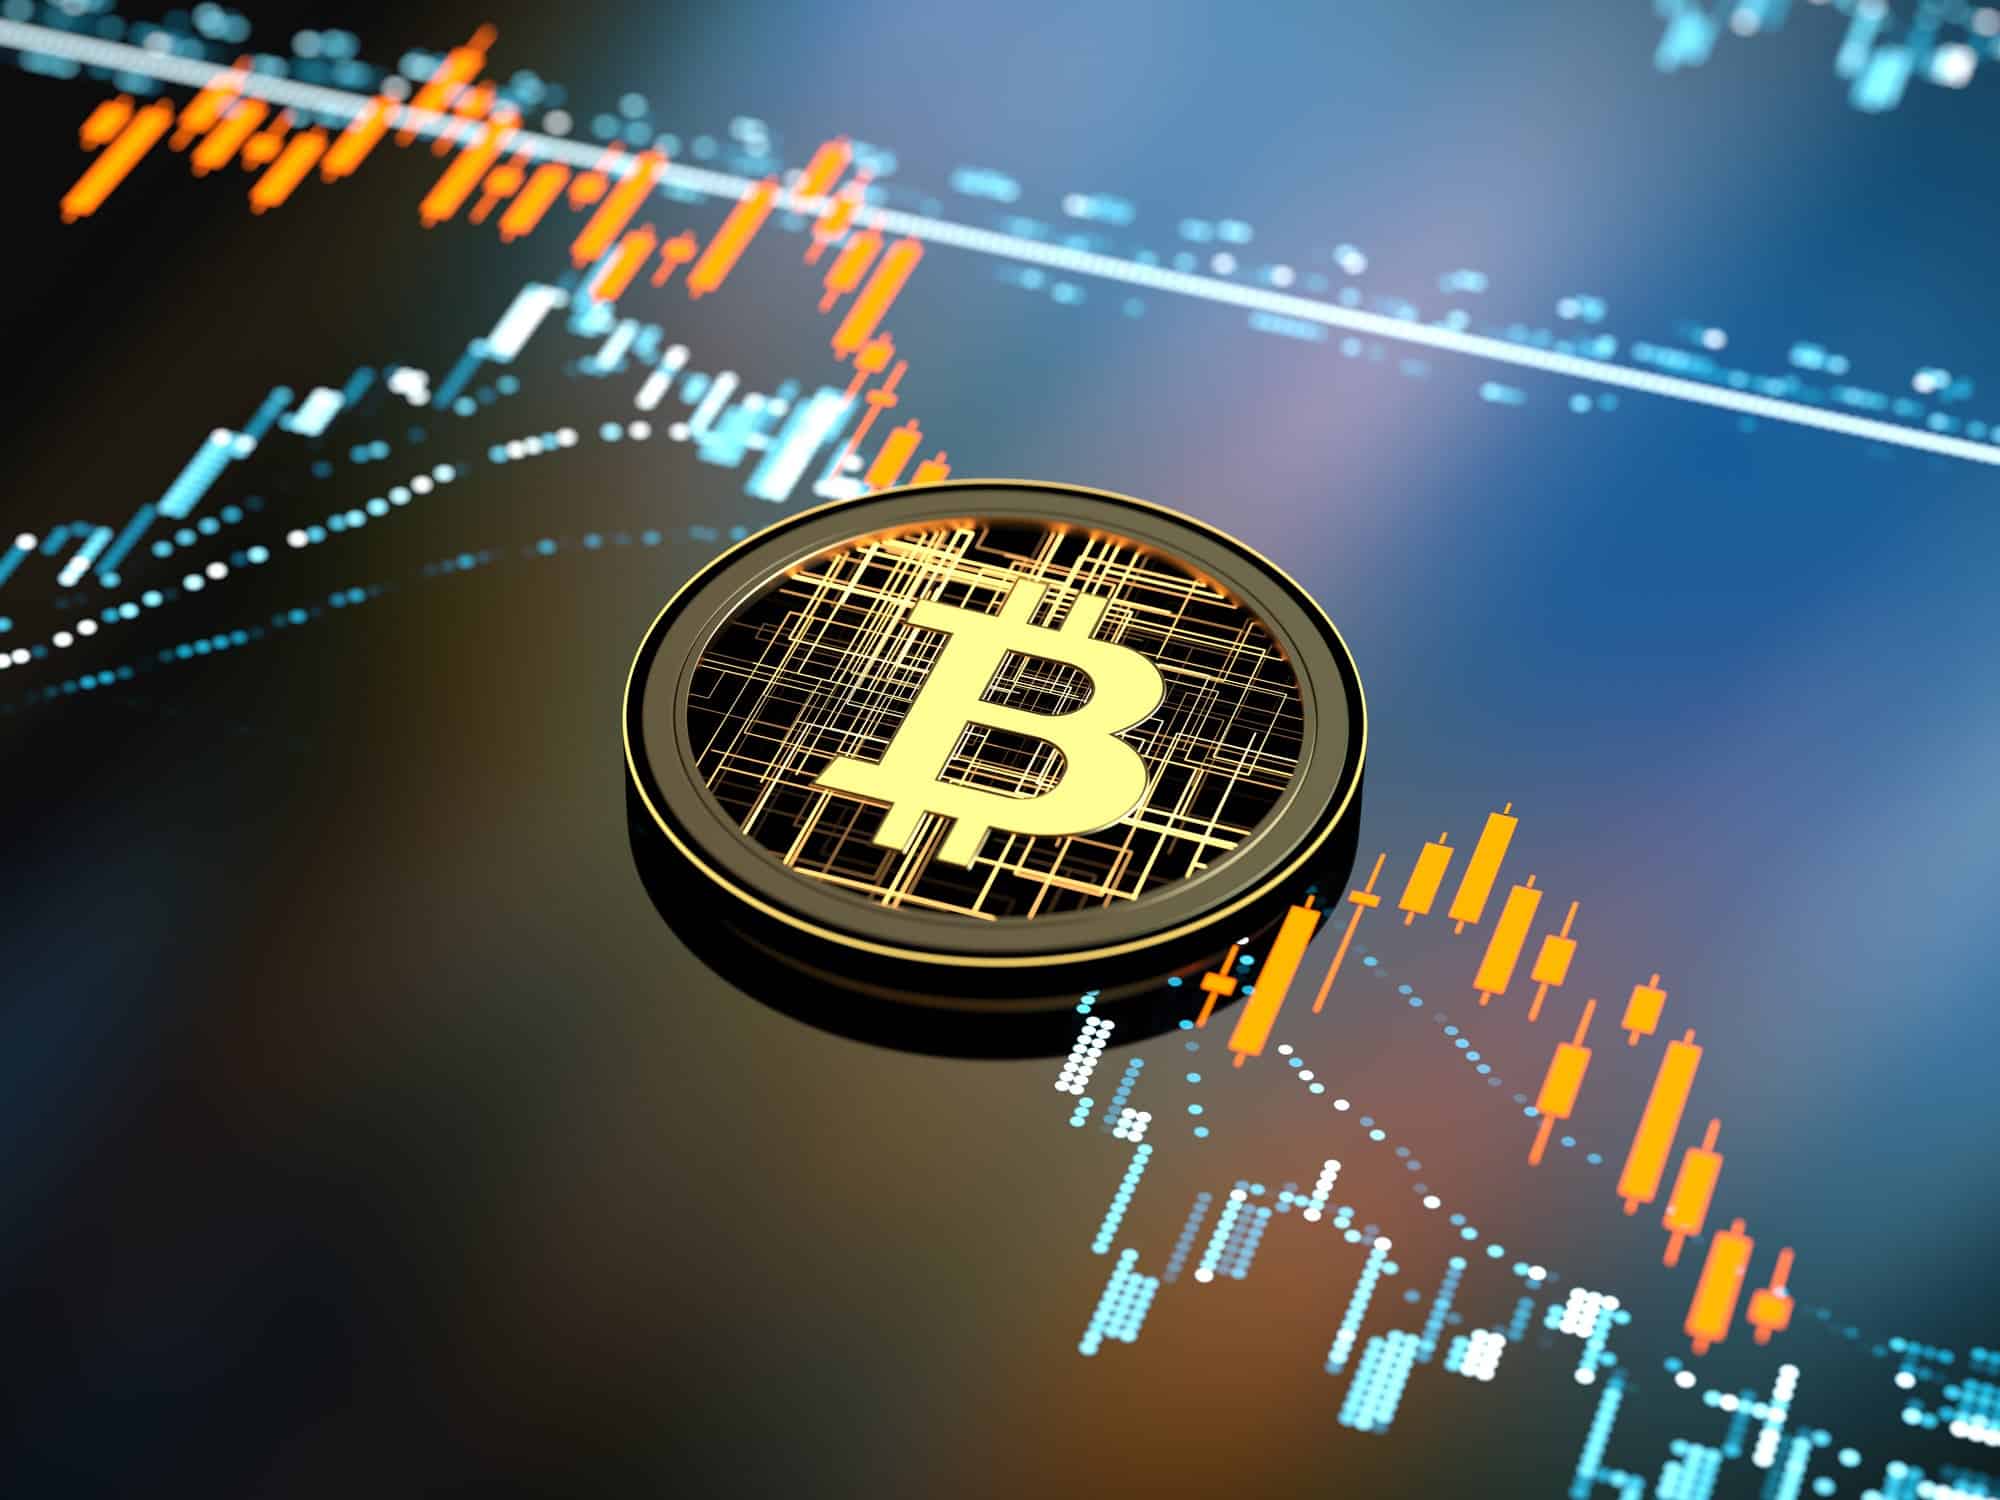 Bulgarian stock exchange enables crypto trading with 8 crypto ETNs